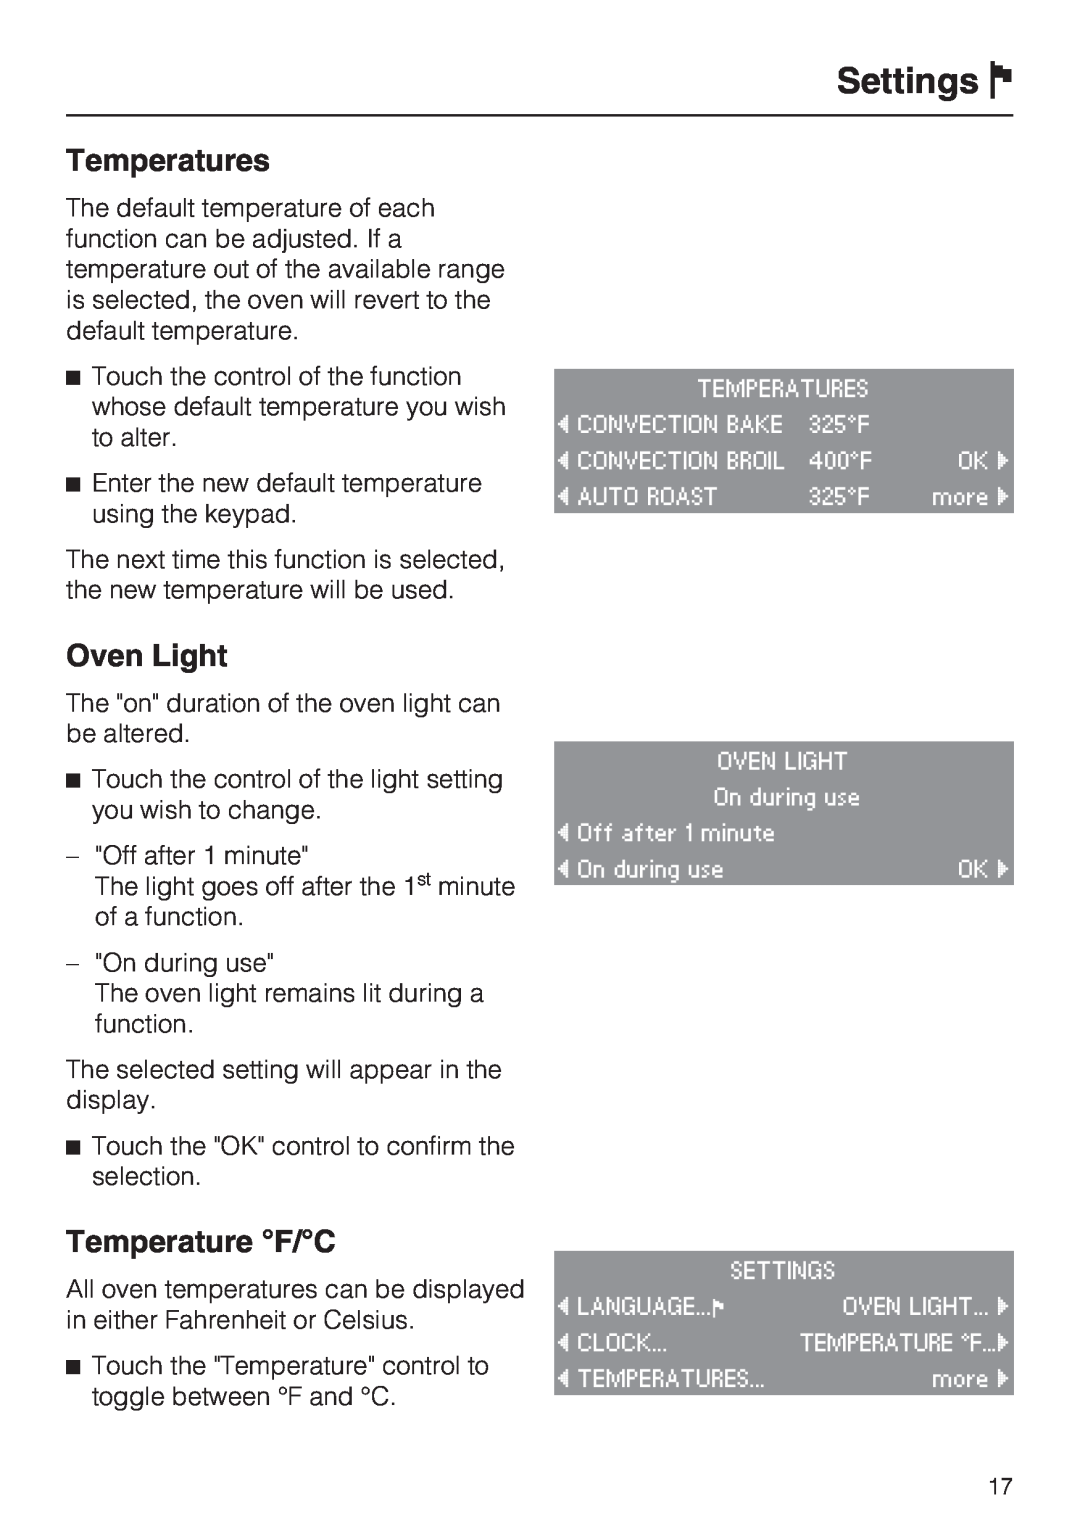 Miele H4080BM installation instructions Temperatures, Oven Light, Temperature F/C, Settings J 